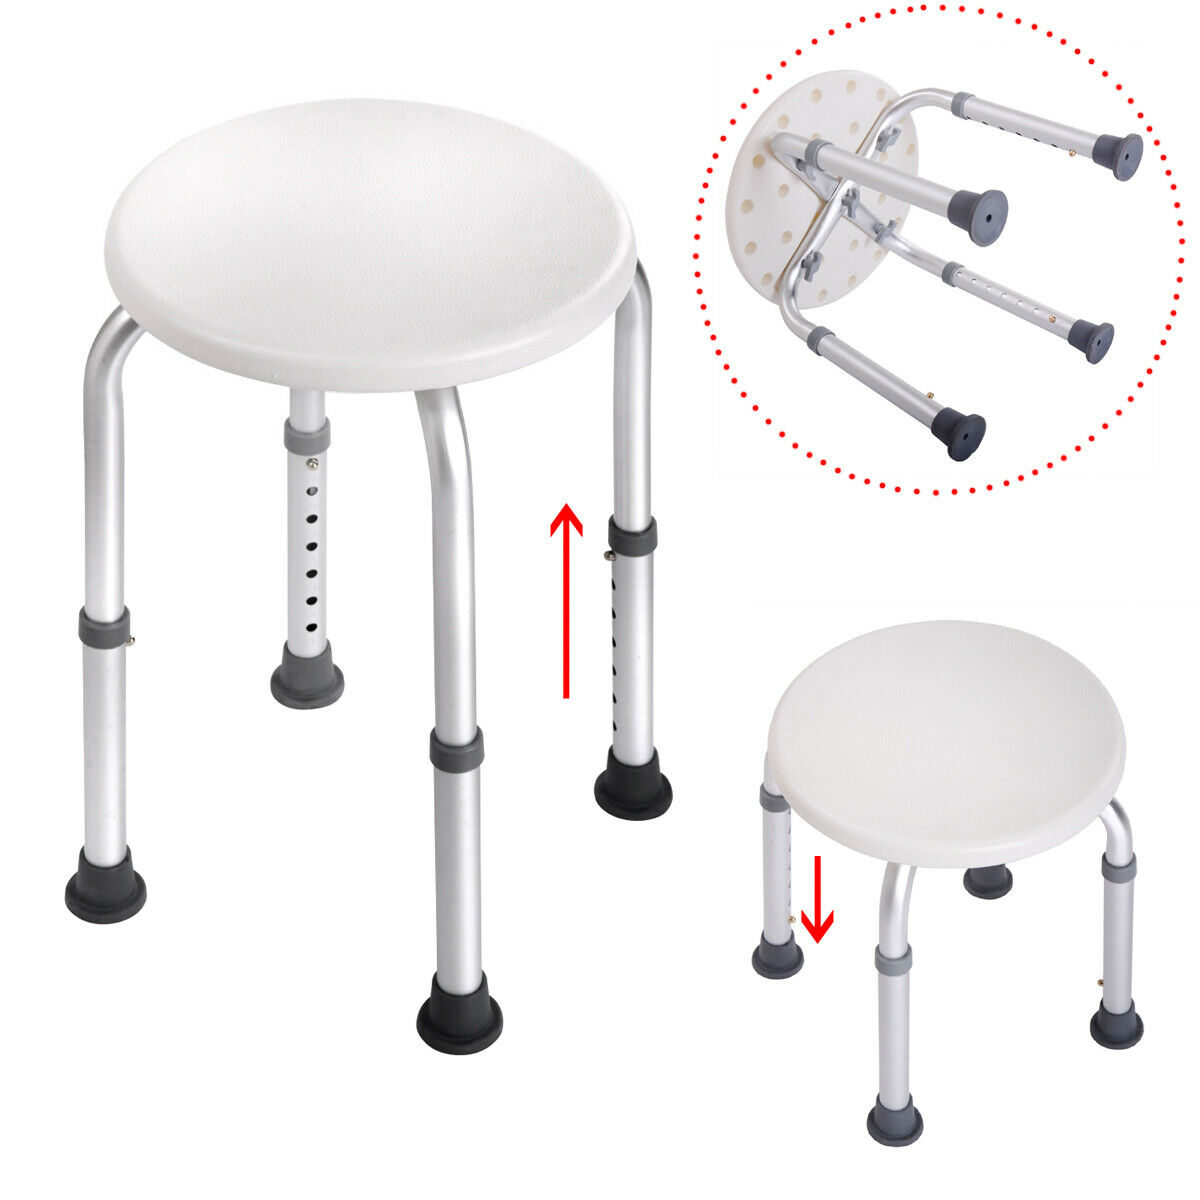 Bath Shower Chair Adjustable Medical 6 Height Bench Bathtub Stool Seat White New